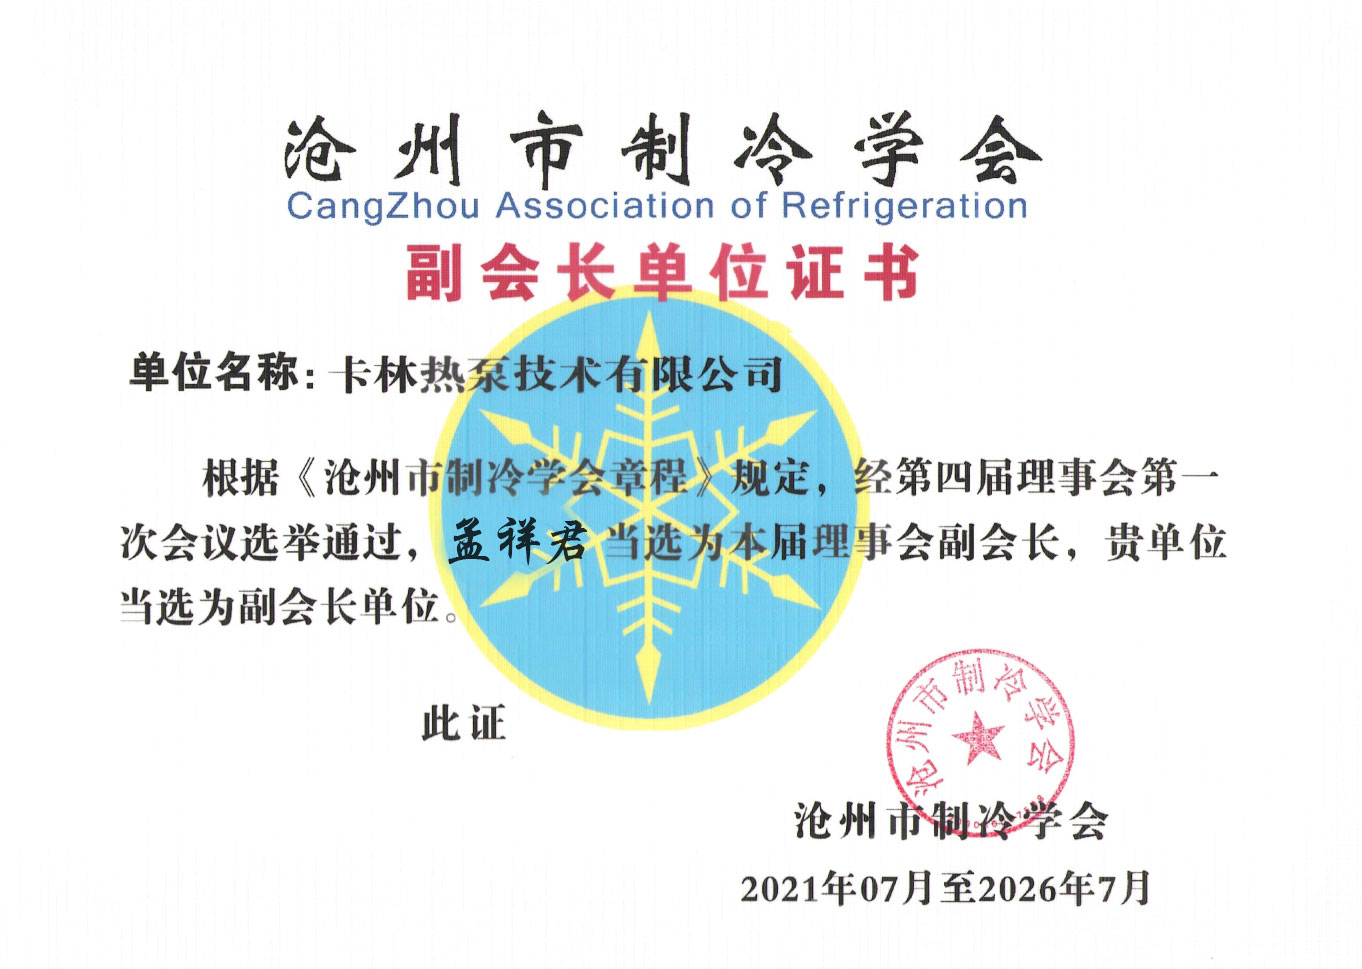 Vice President Unit of Cangzhou Refrigeration Soci